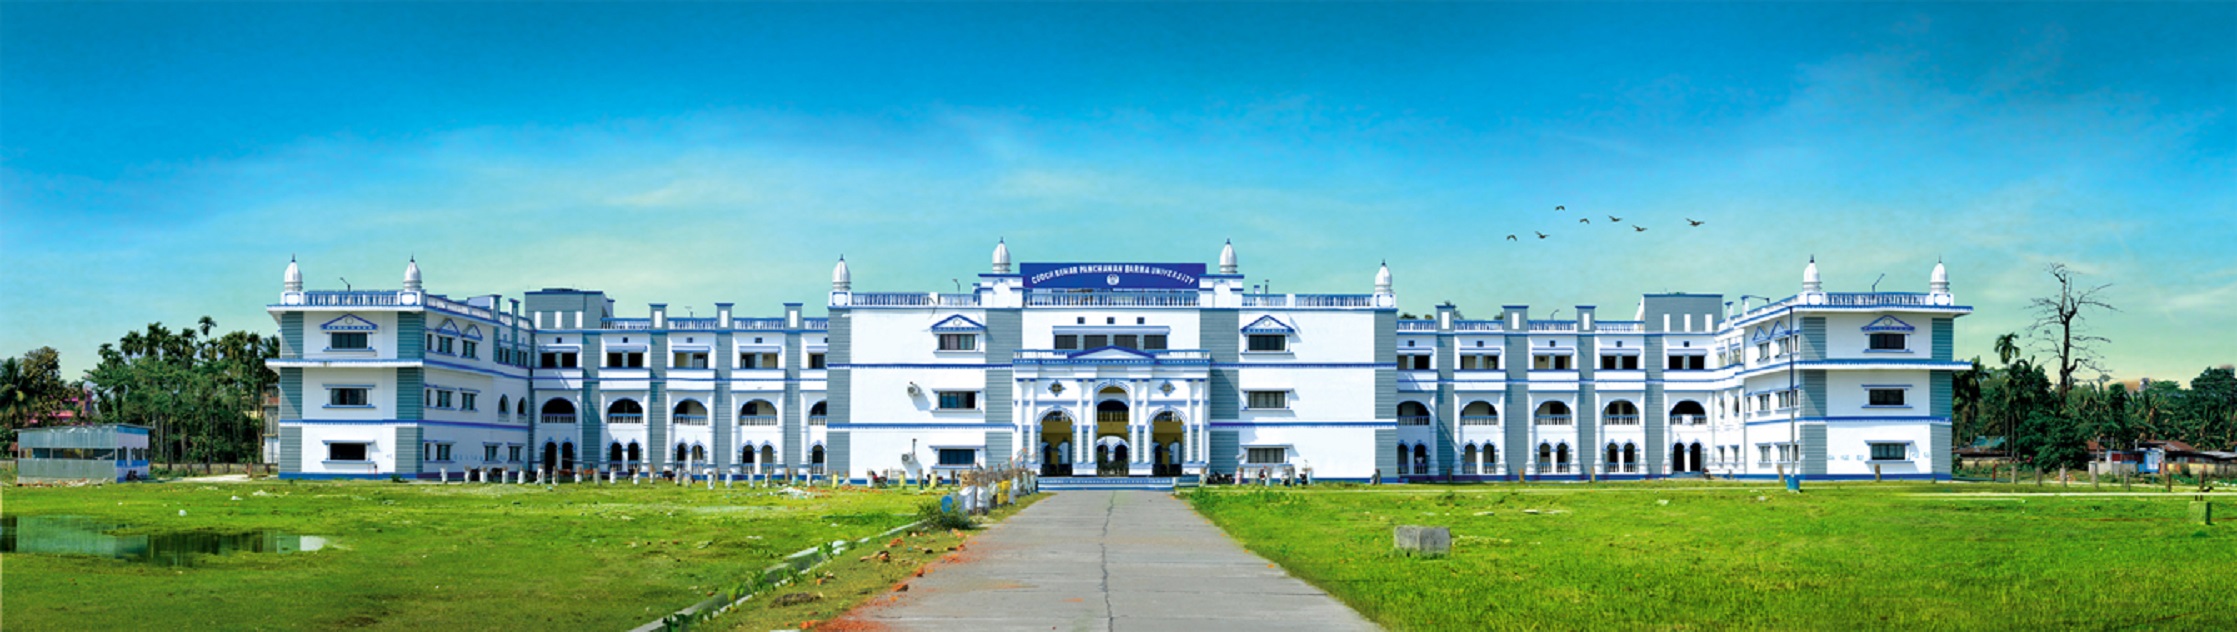 Cooch Behar Panchanan Barma University